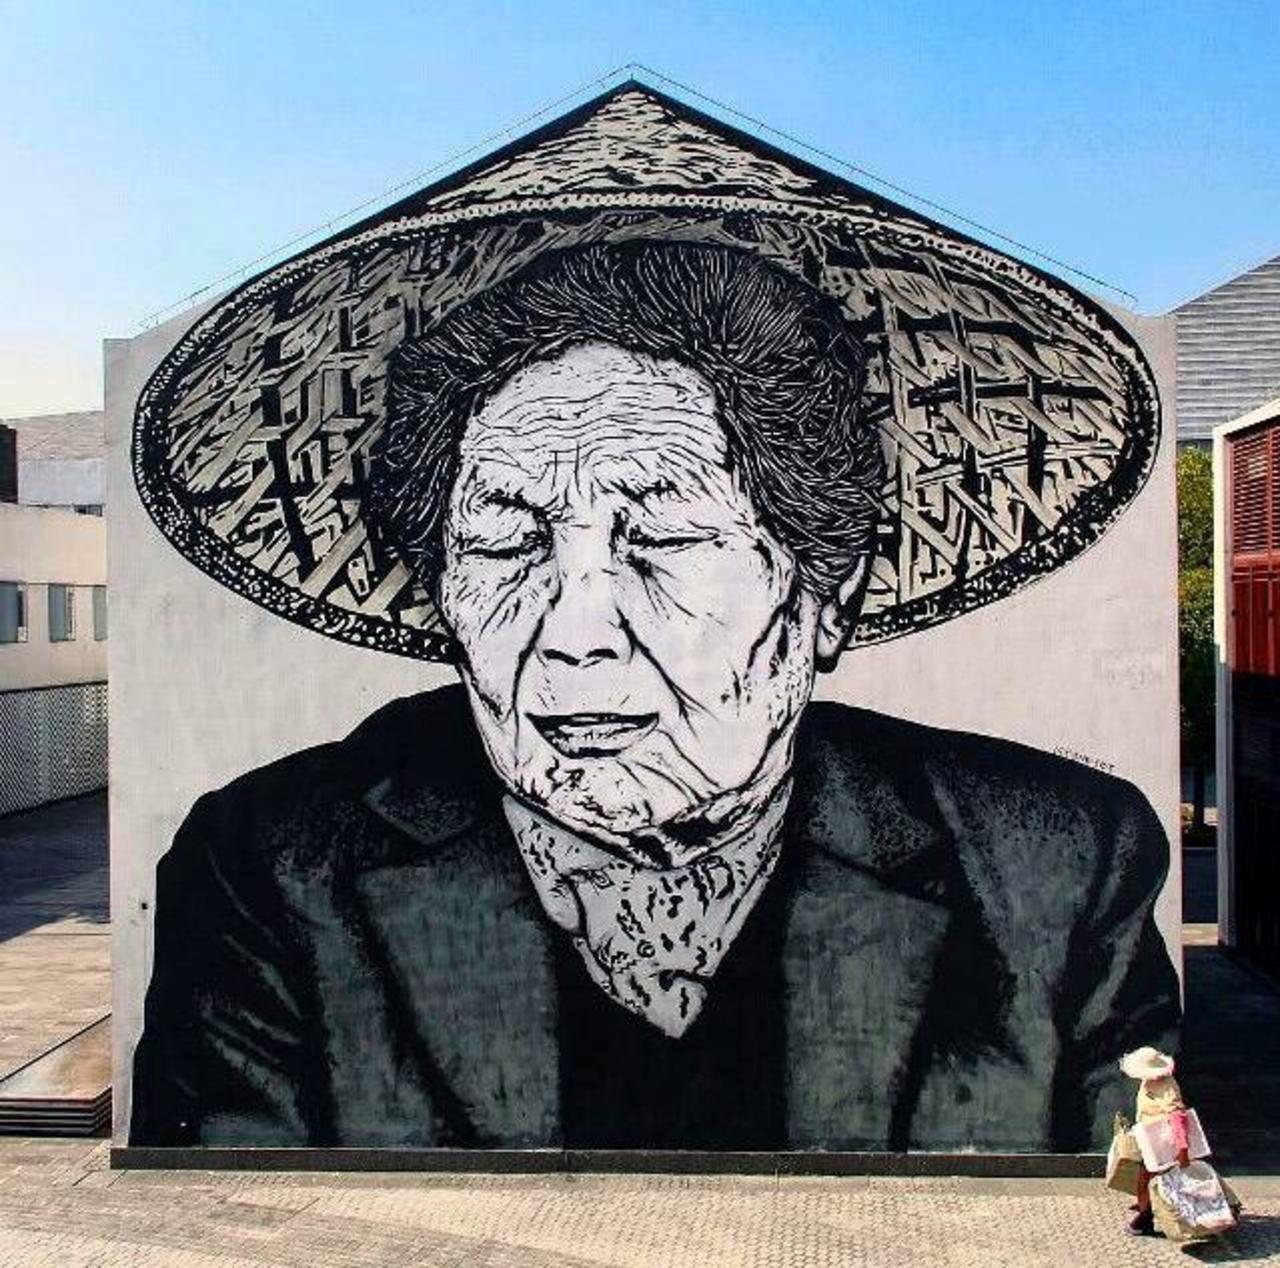 New Street Art by icy&sot in Shanghai  

#art #graffiti #mural #streetart http://t.co/hTvlFfCbeZ